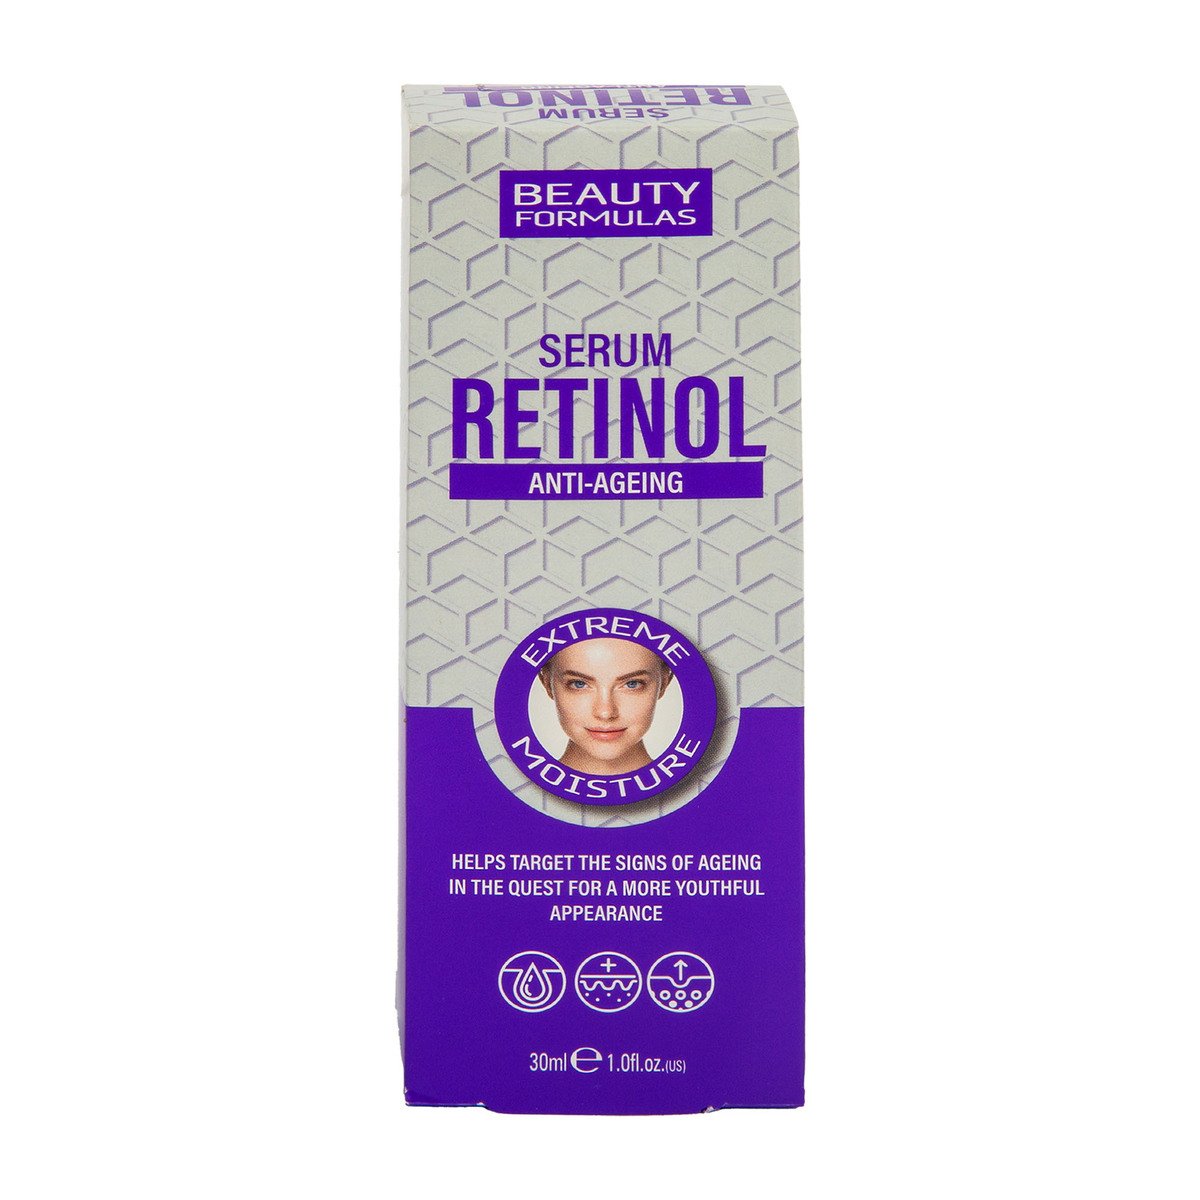 Beauty Formulas Anti-Ageing Serum Retinol Extreme Moisture 30 ml